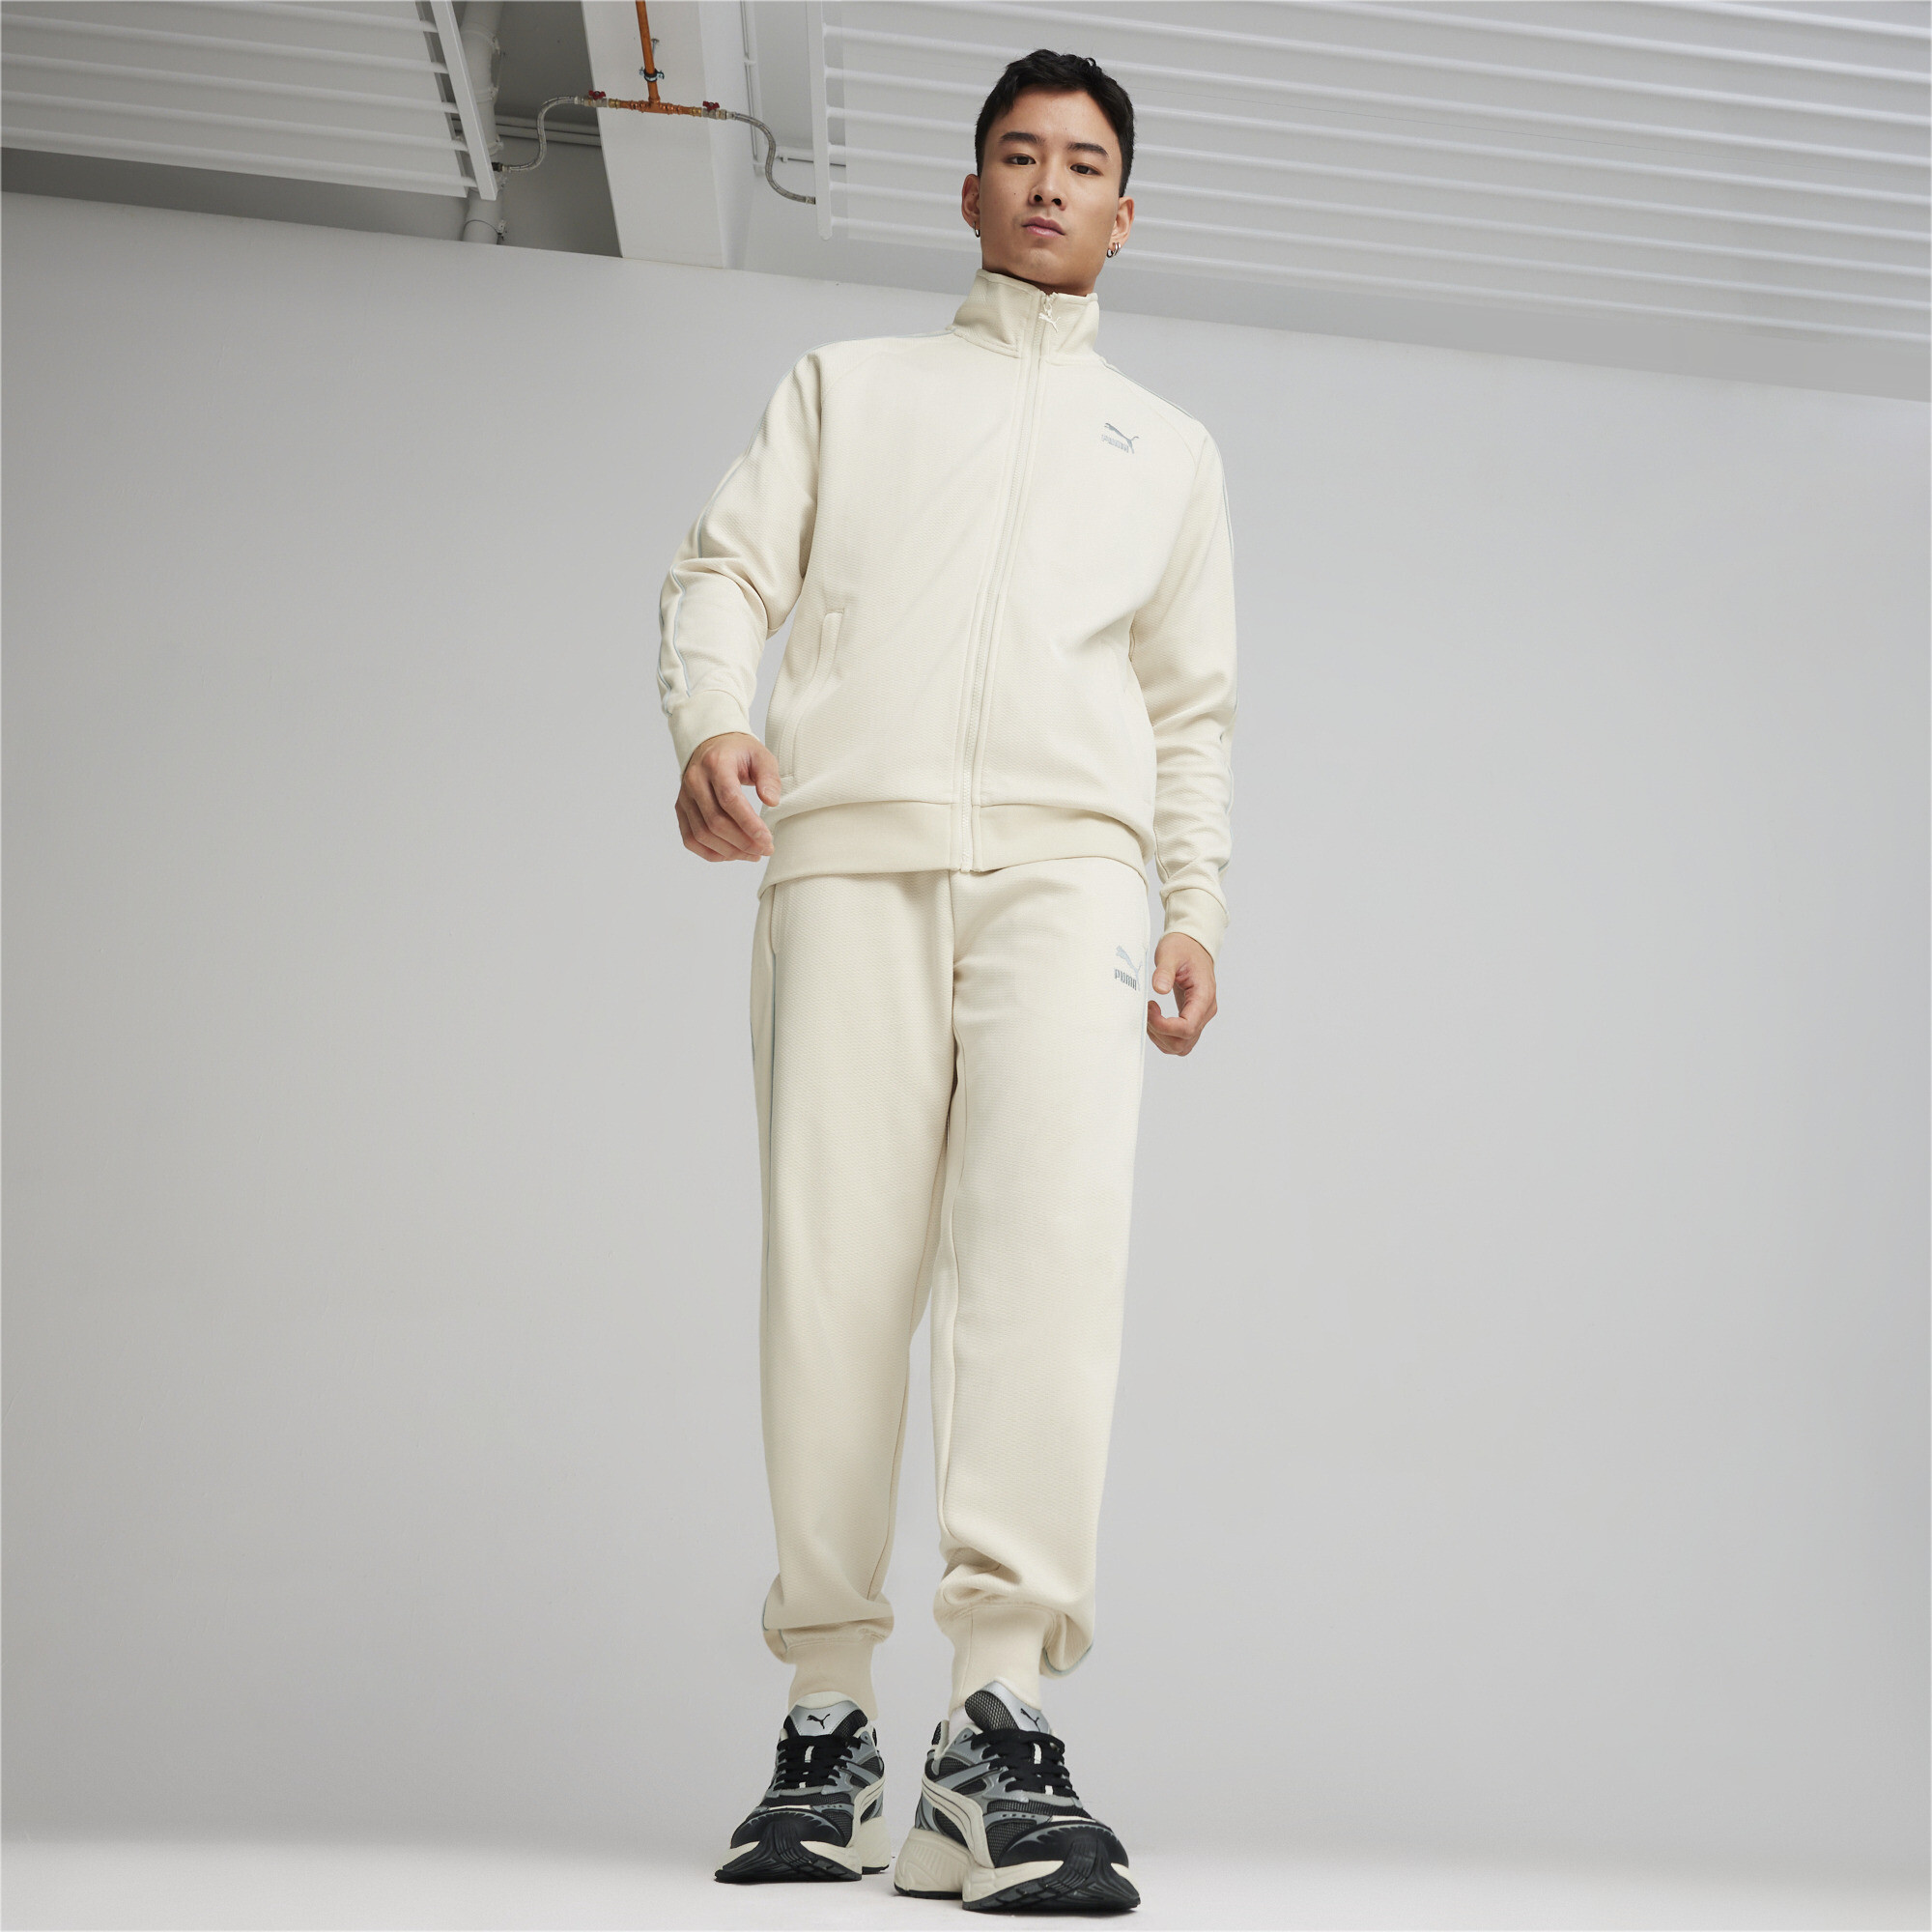 Men's Puma T7's Track Pants, White, Size S, Clothing